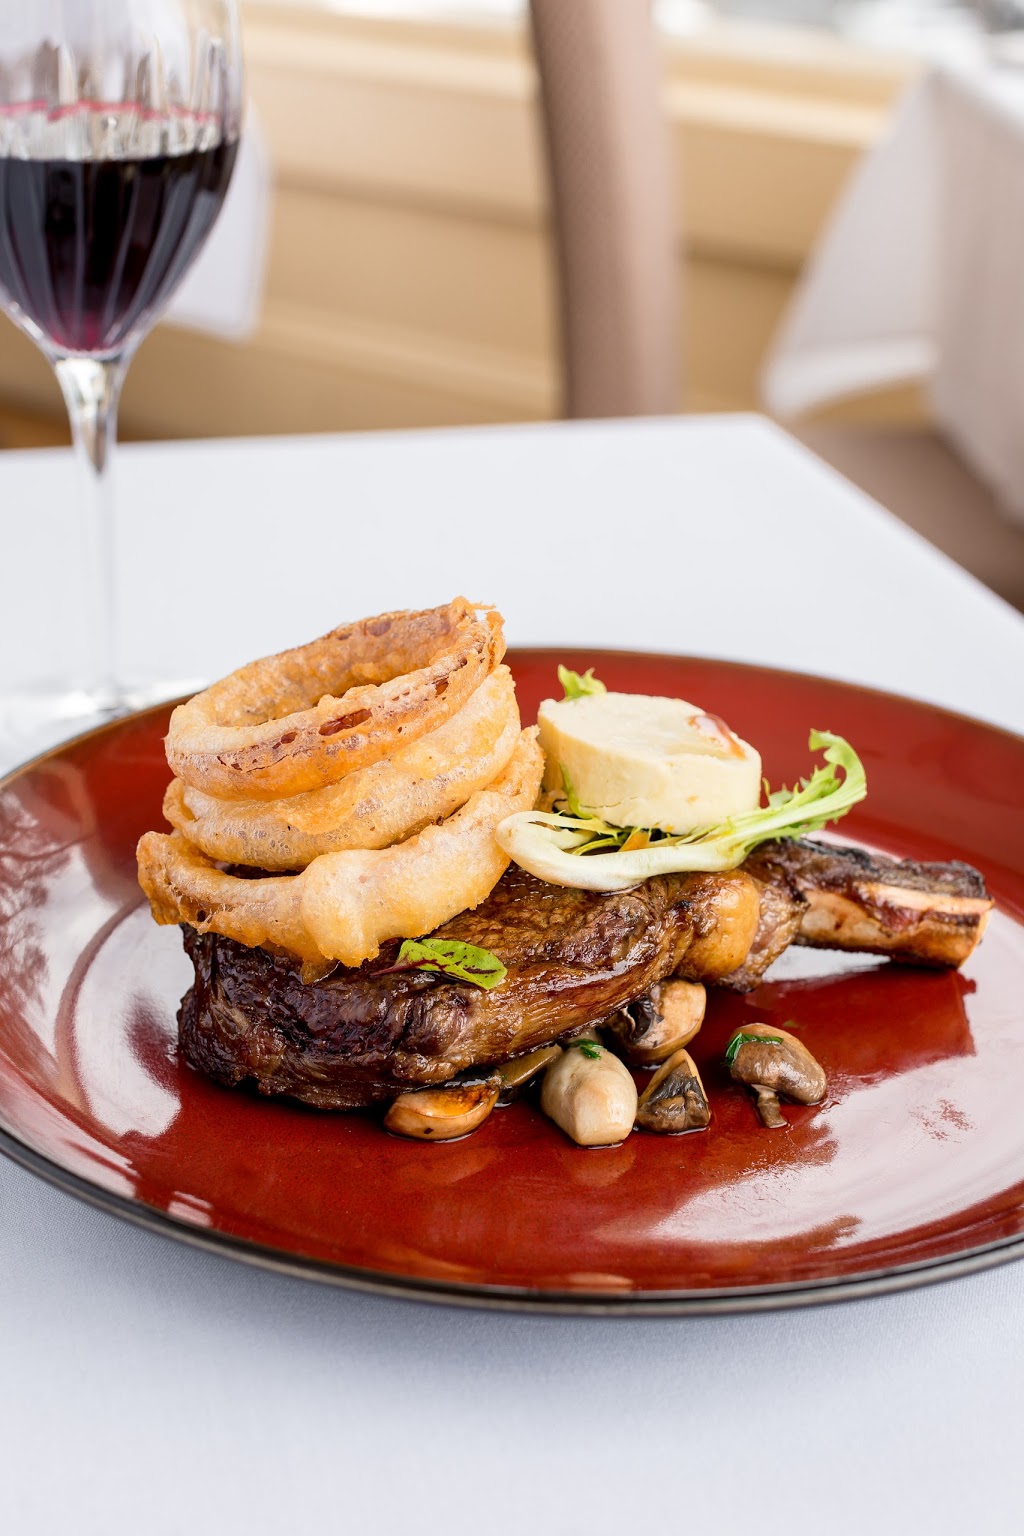 Seasalt Restaurant | restaurant | Pine Tree Ln, Terrigal NSW 2260, Australia | 0243849133 OR +61 2 4384 9133